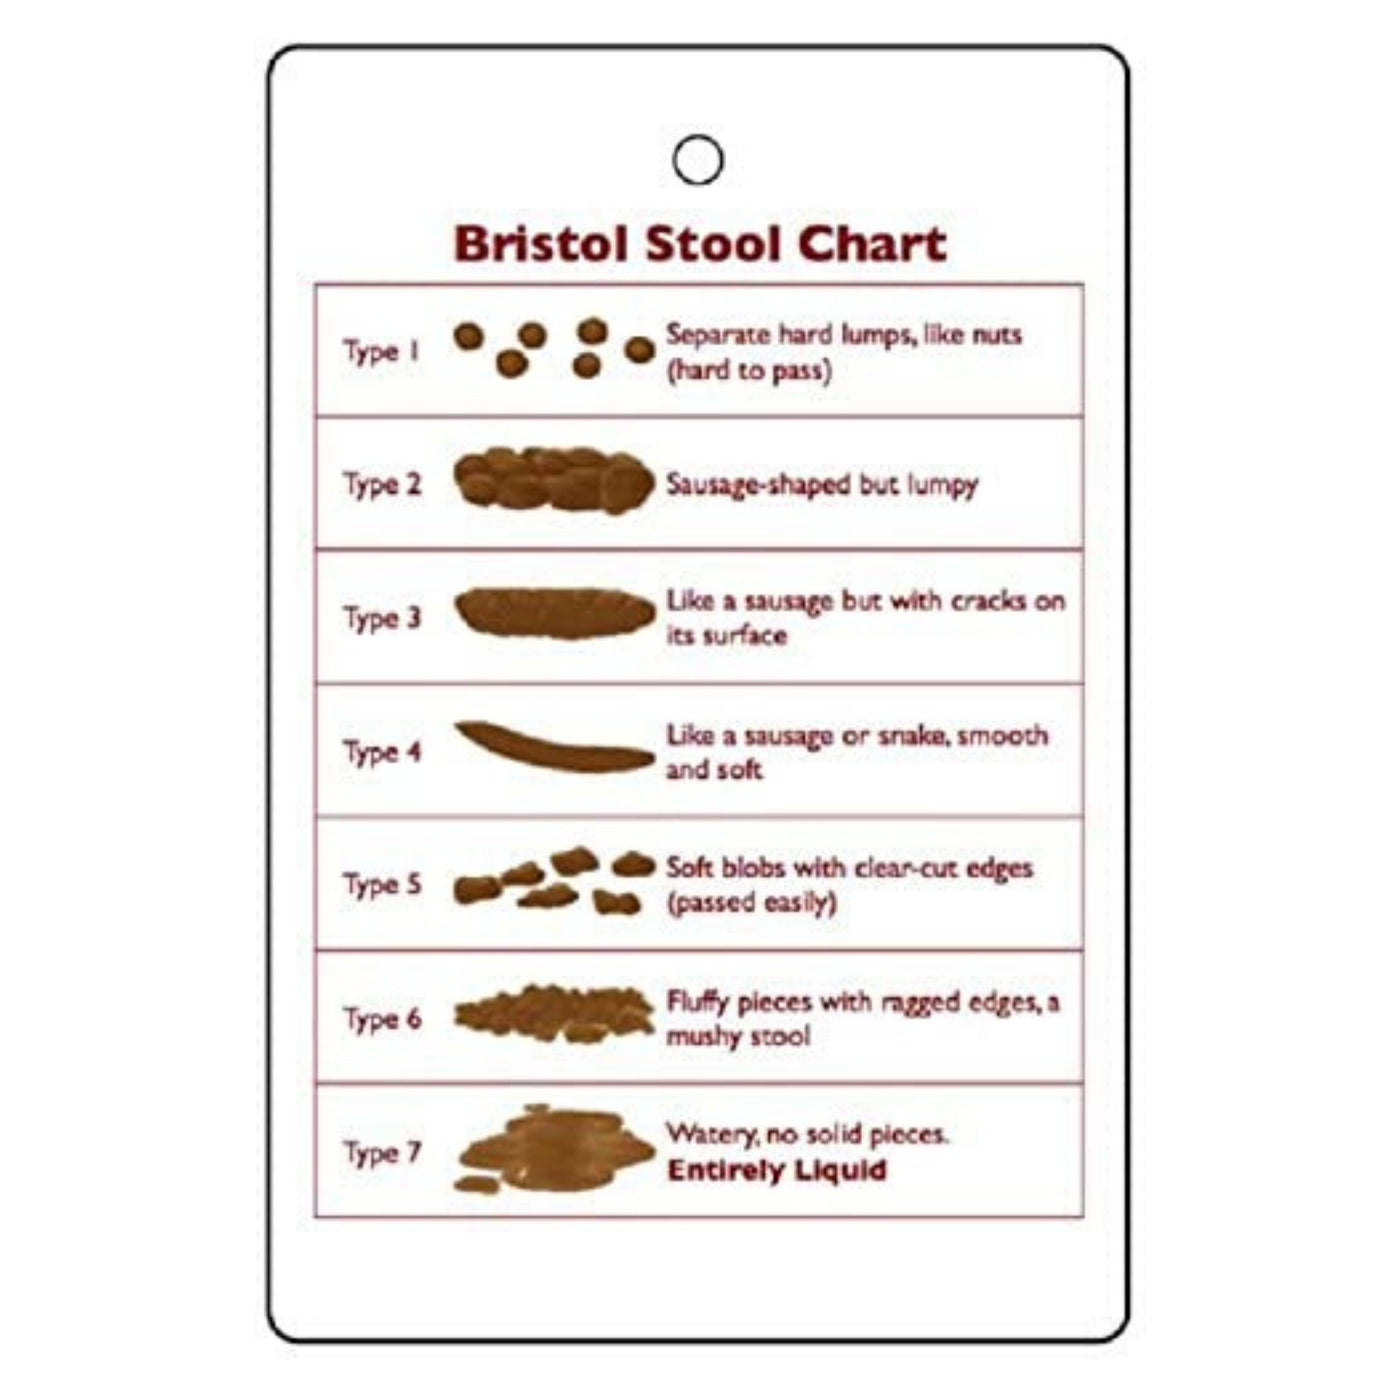 Air Freshener Bristol Stool Chart